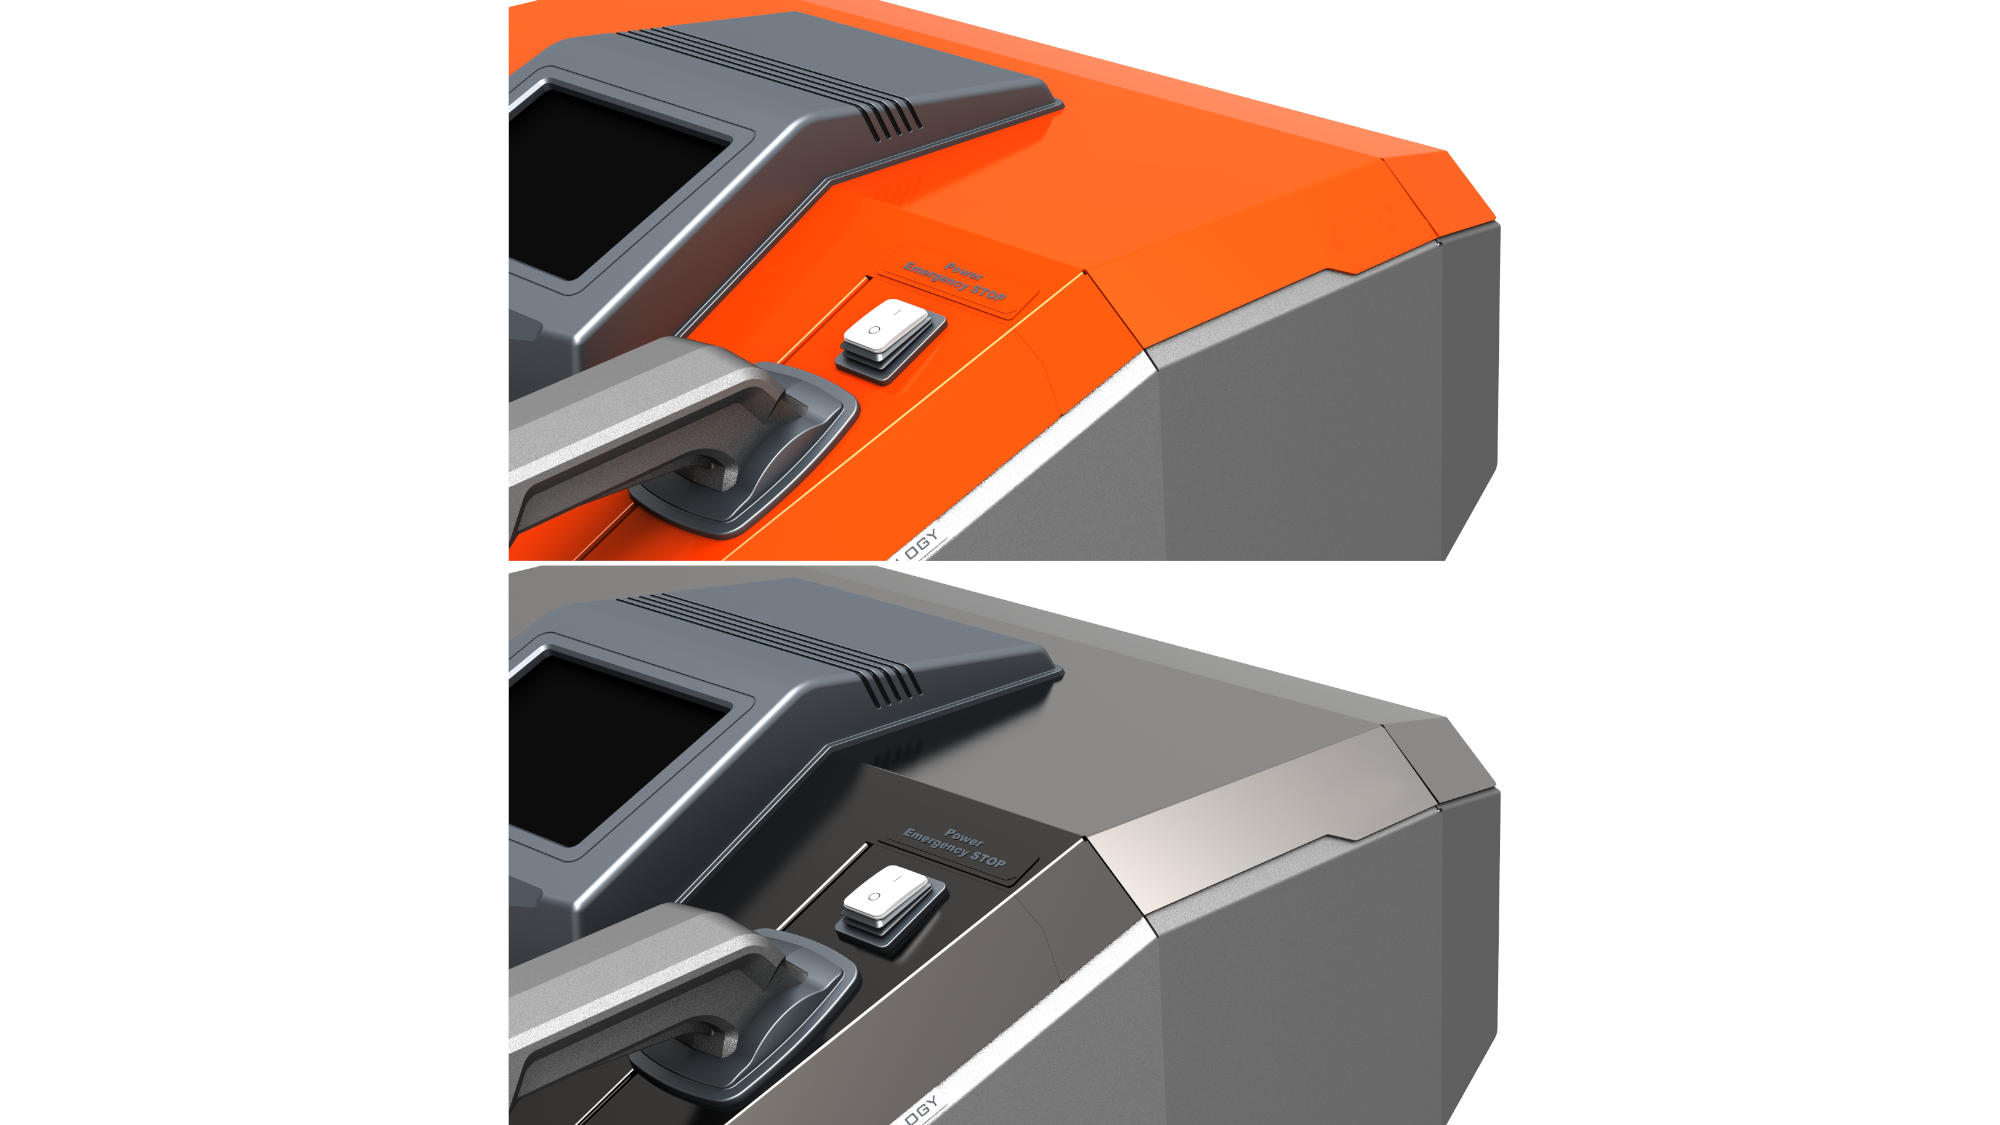 Hacona I-type orange impulse sealer and Hacona VI-type inox impulse sealer